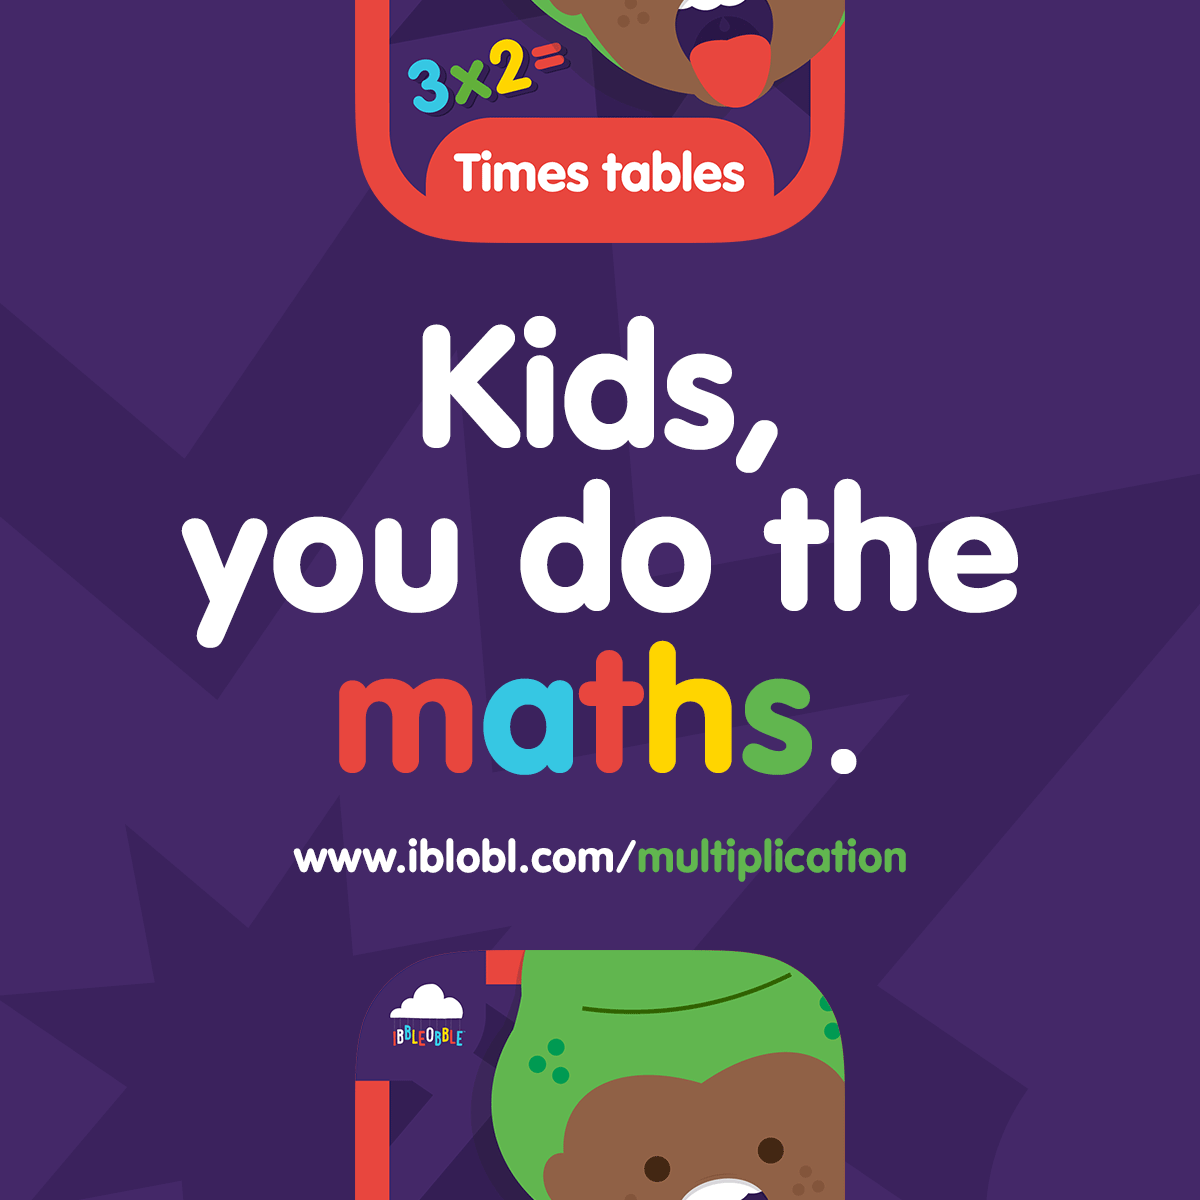 🐸 #Practice #multiplication the boring way or the #FUN way... #kids, you do the #maths! apple.co/2XZ76ri #TimesTables #Math #Mathematics #primarySchool #school #homeschool #homeschooling #thursdaymotivation #thursdaythoughts